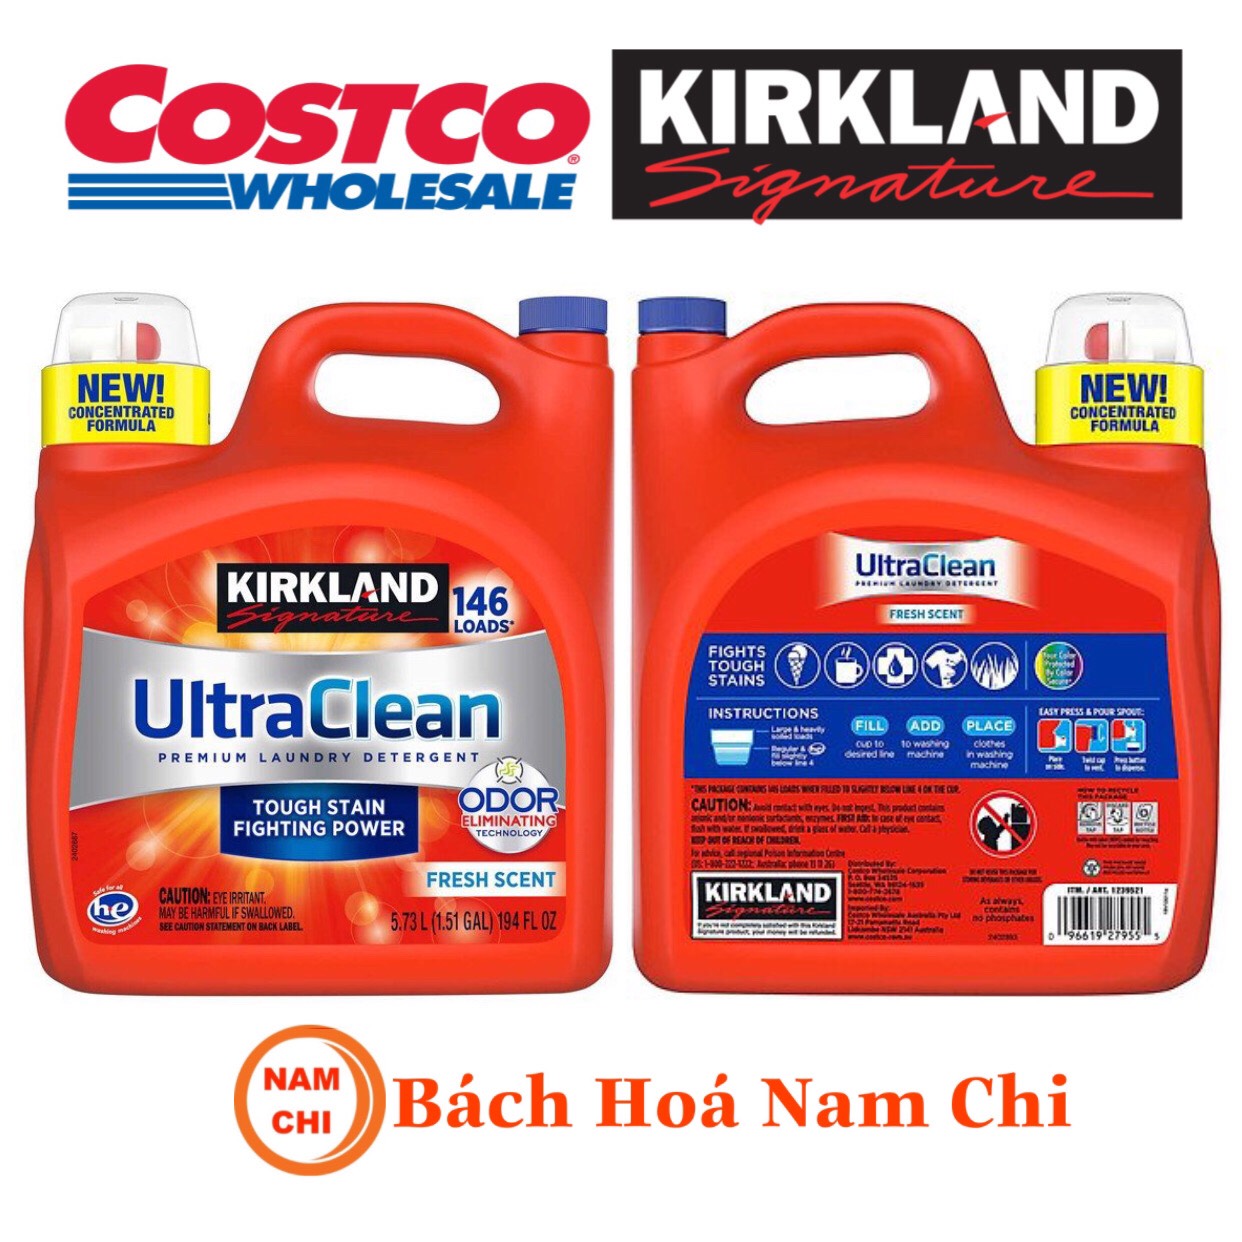 Nước Giặt Kirkland Ultra Clean Premium Laudry Detergent 5.73L - Mỹ